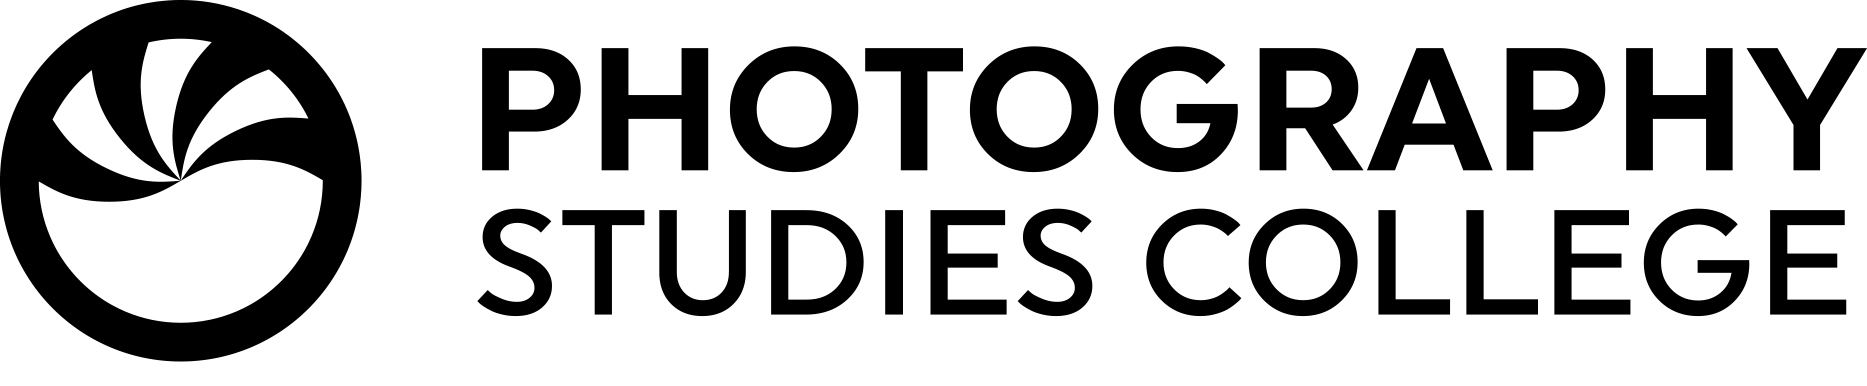 Photography Studies College logo